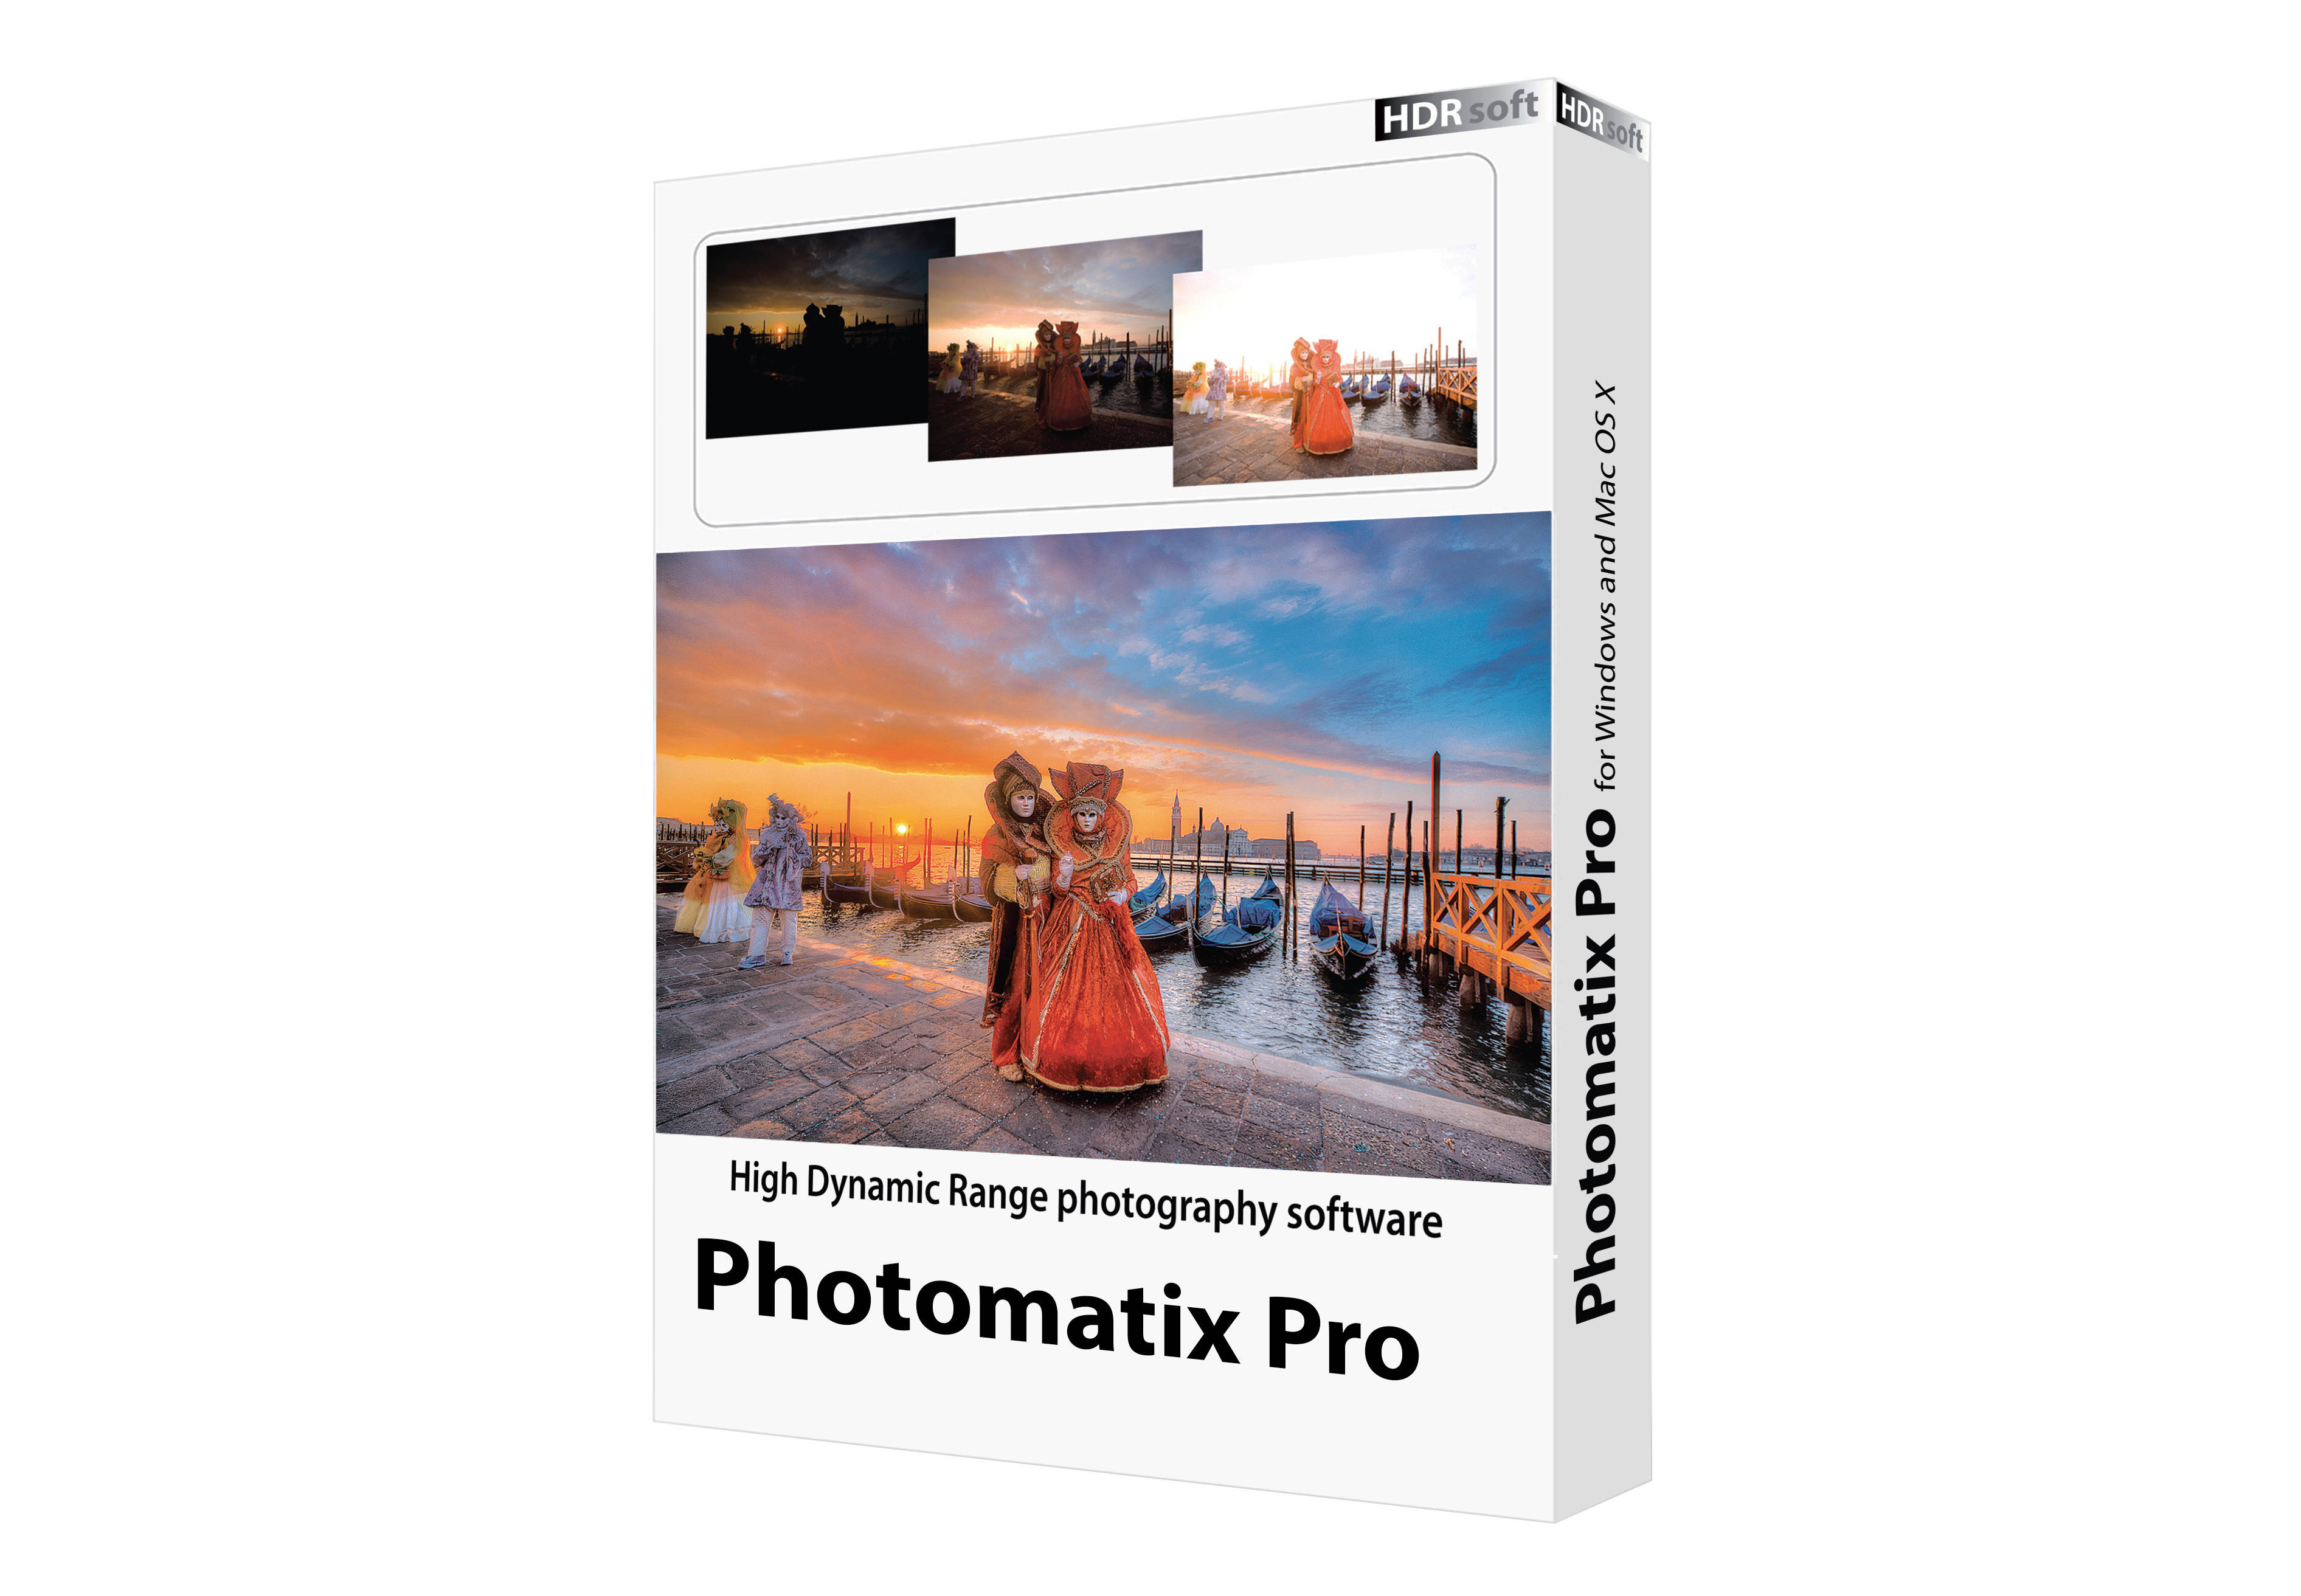 HDR Photomatix Pro 7 CD Key, $6.77